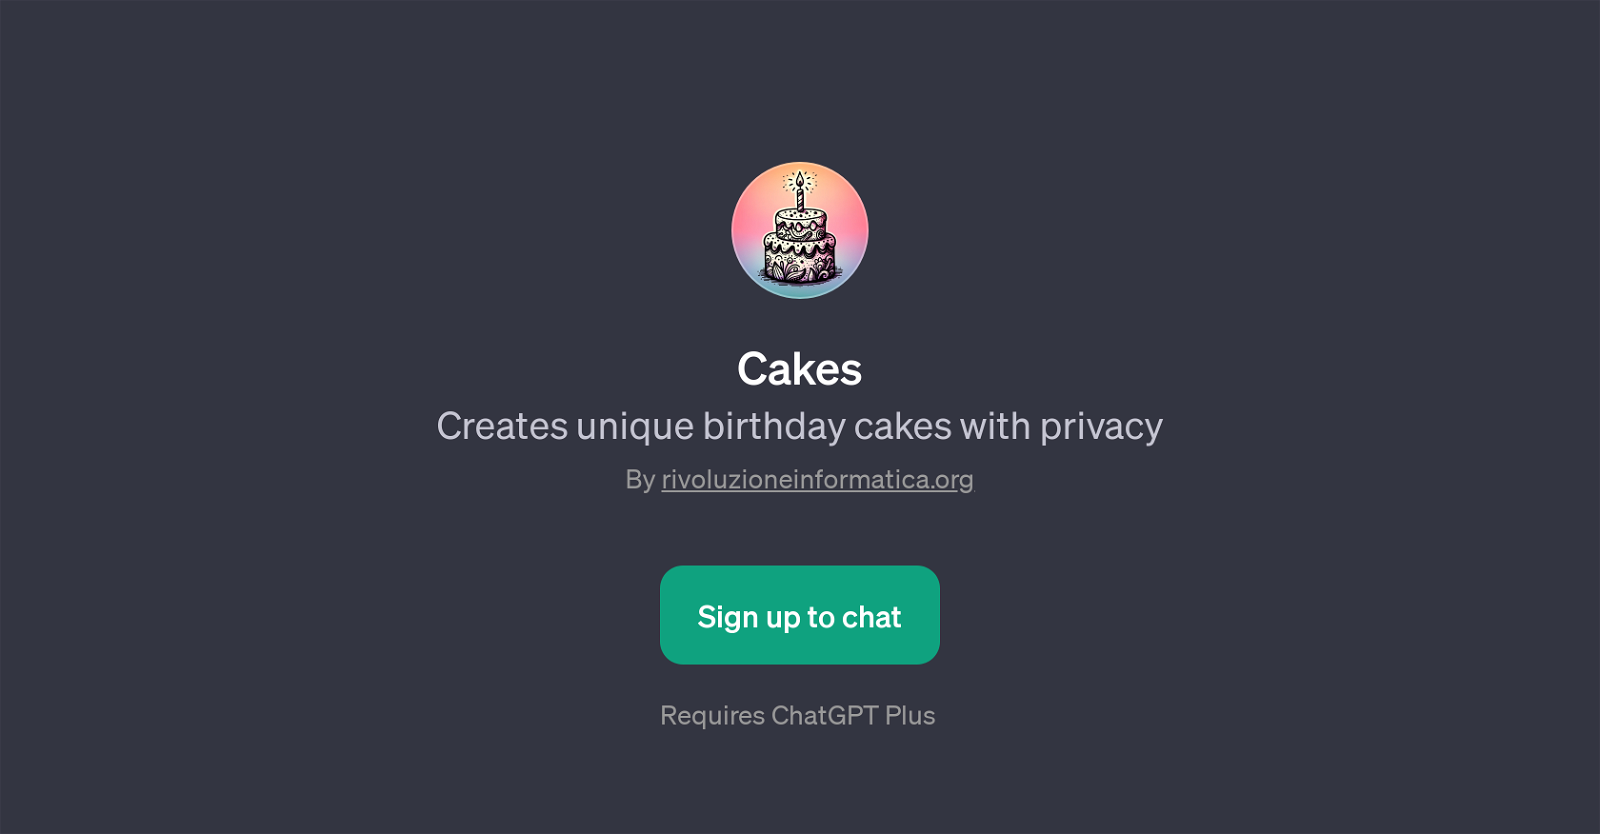 Cakes website